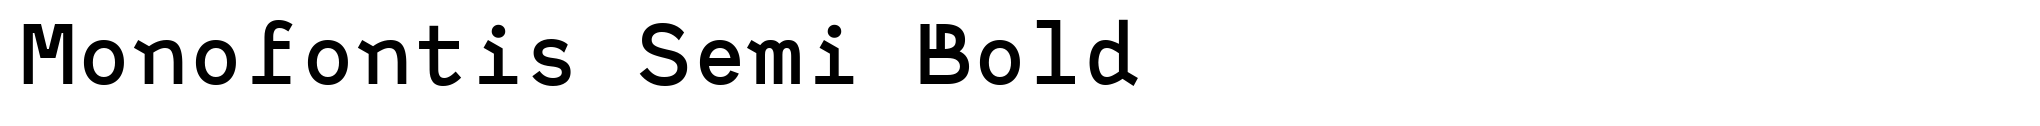 Monofontis Semi Bold image